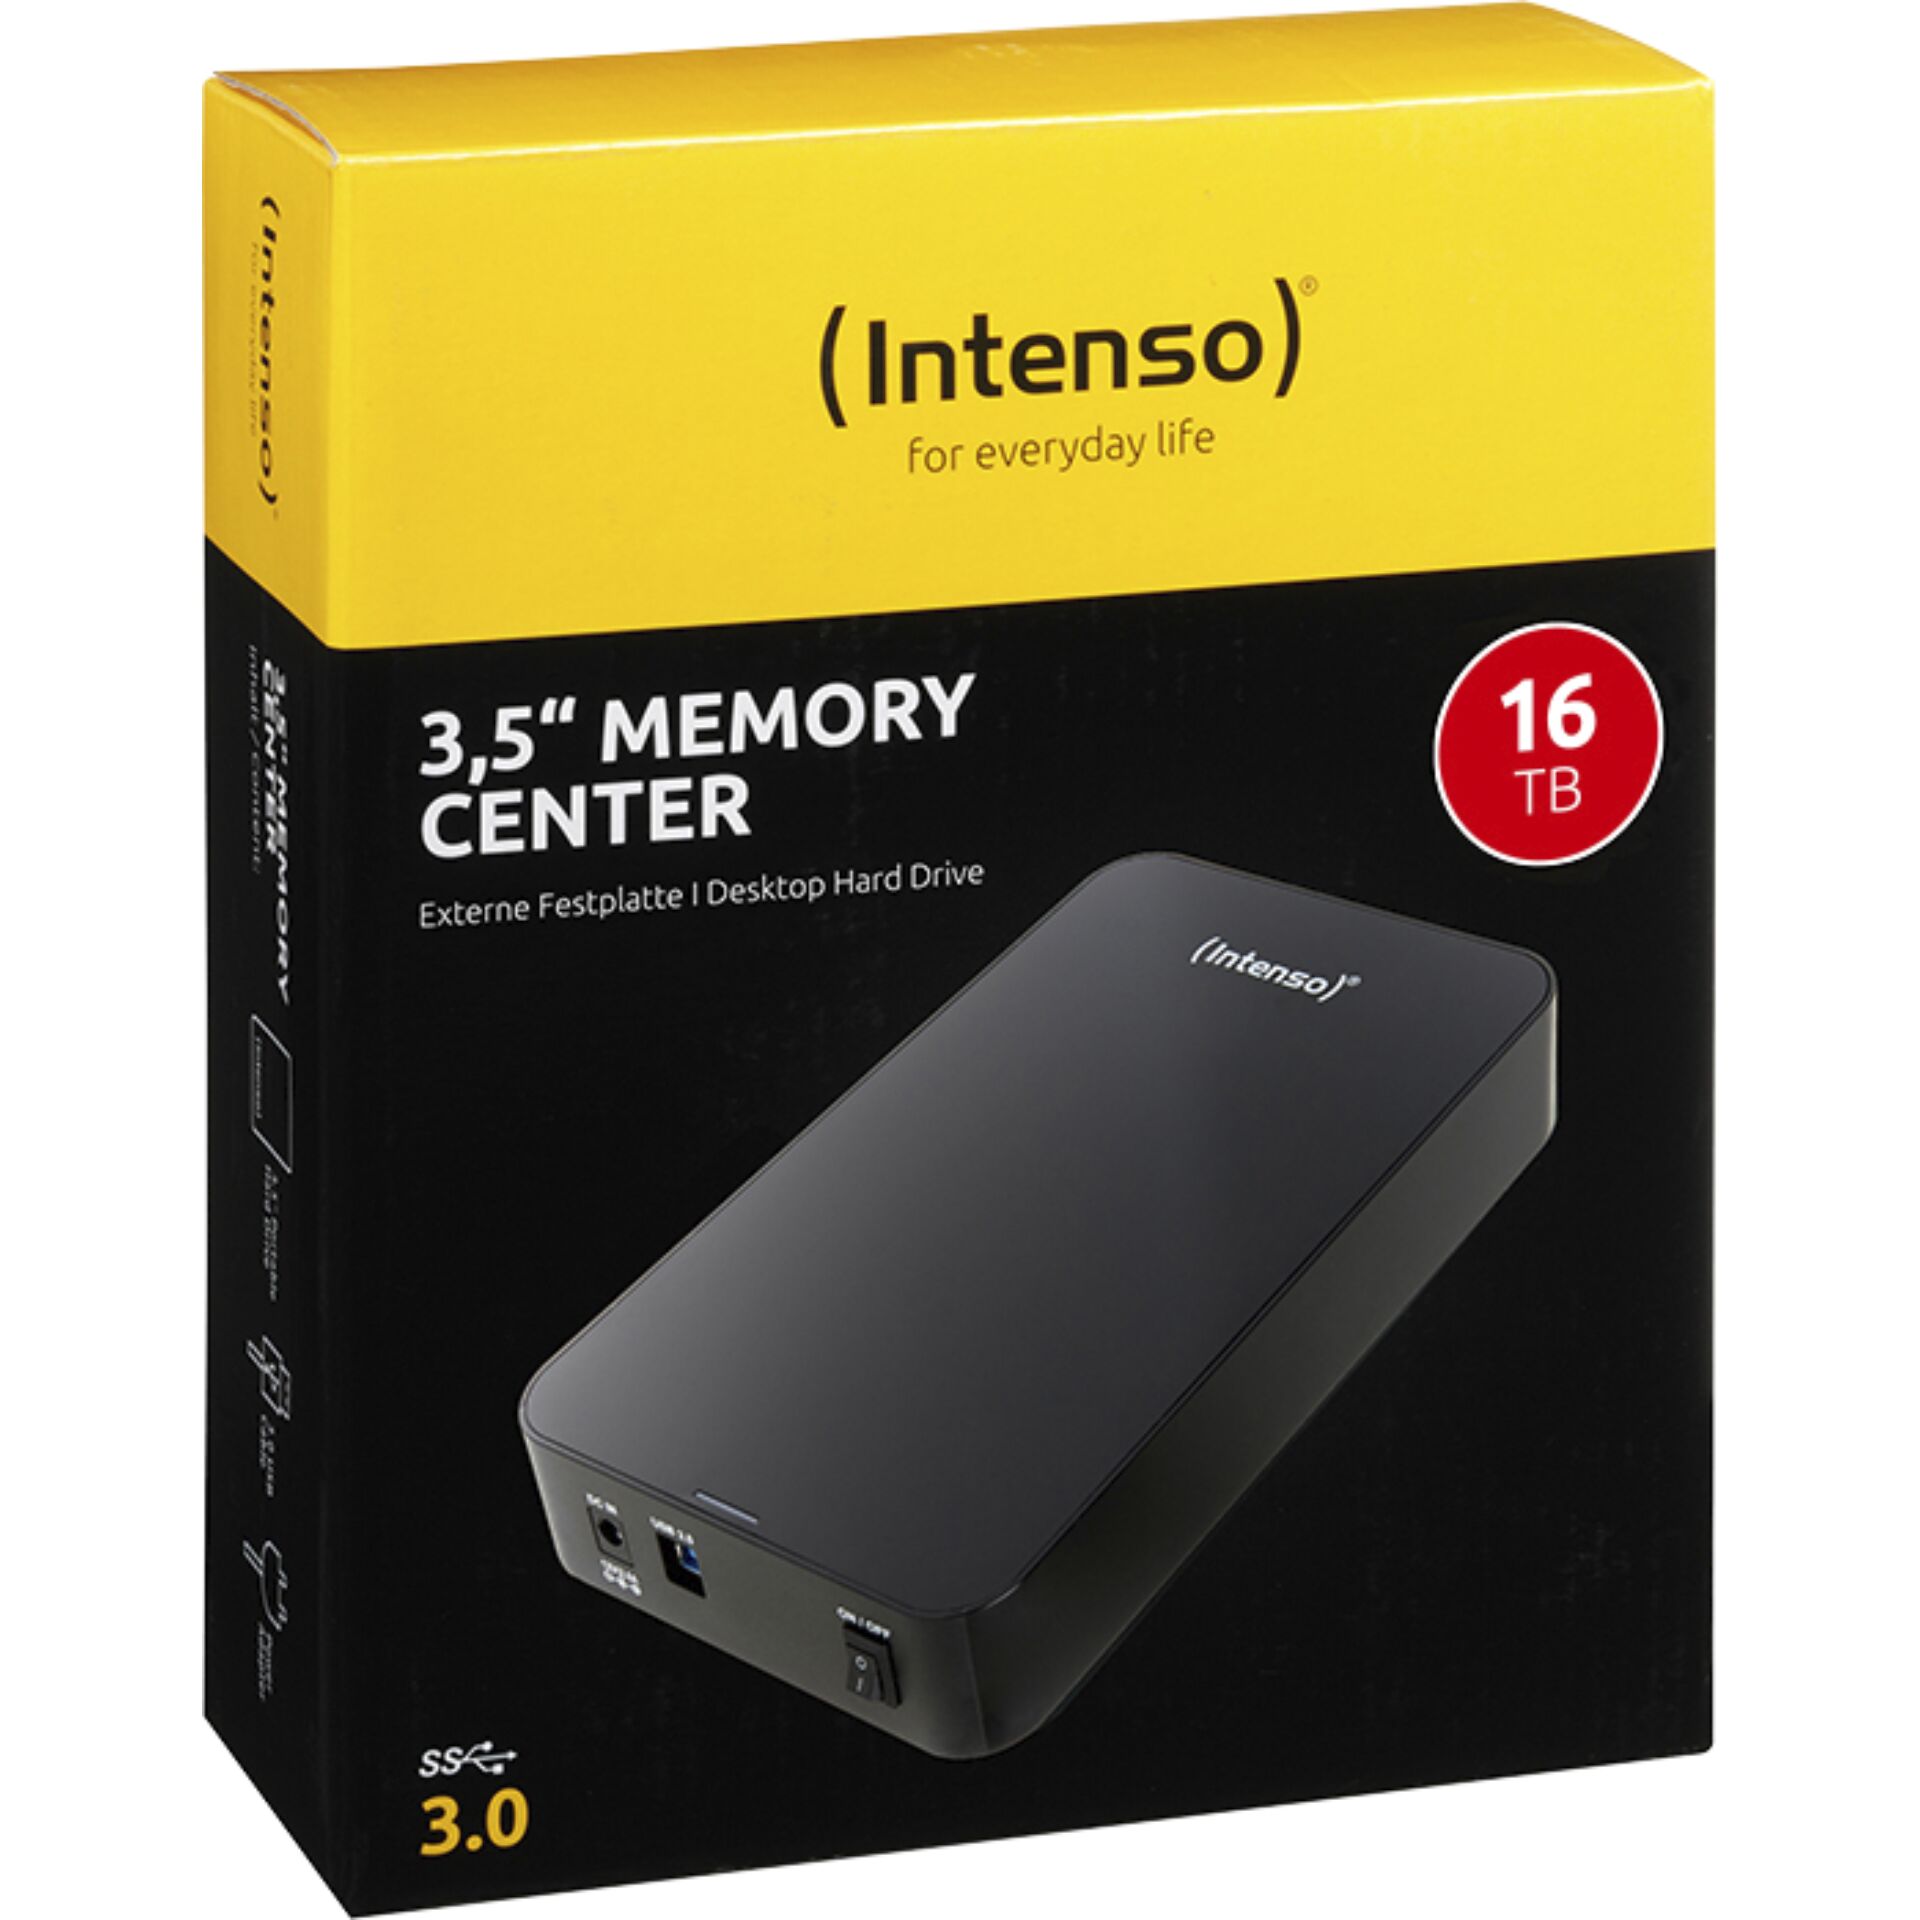 -Intenso schwarz 3.0 Hardware/Electronic USB -5\'\' Intenso 16TB Center Memory 3 HDD